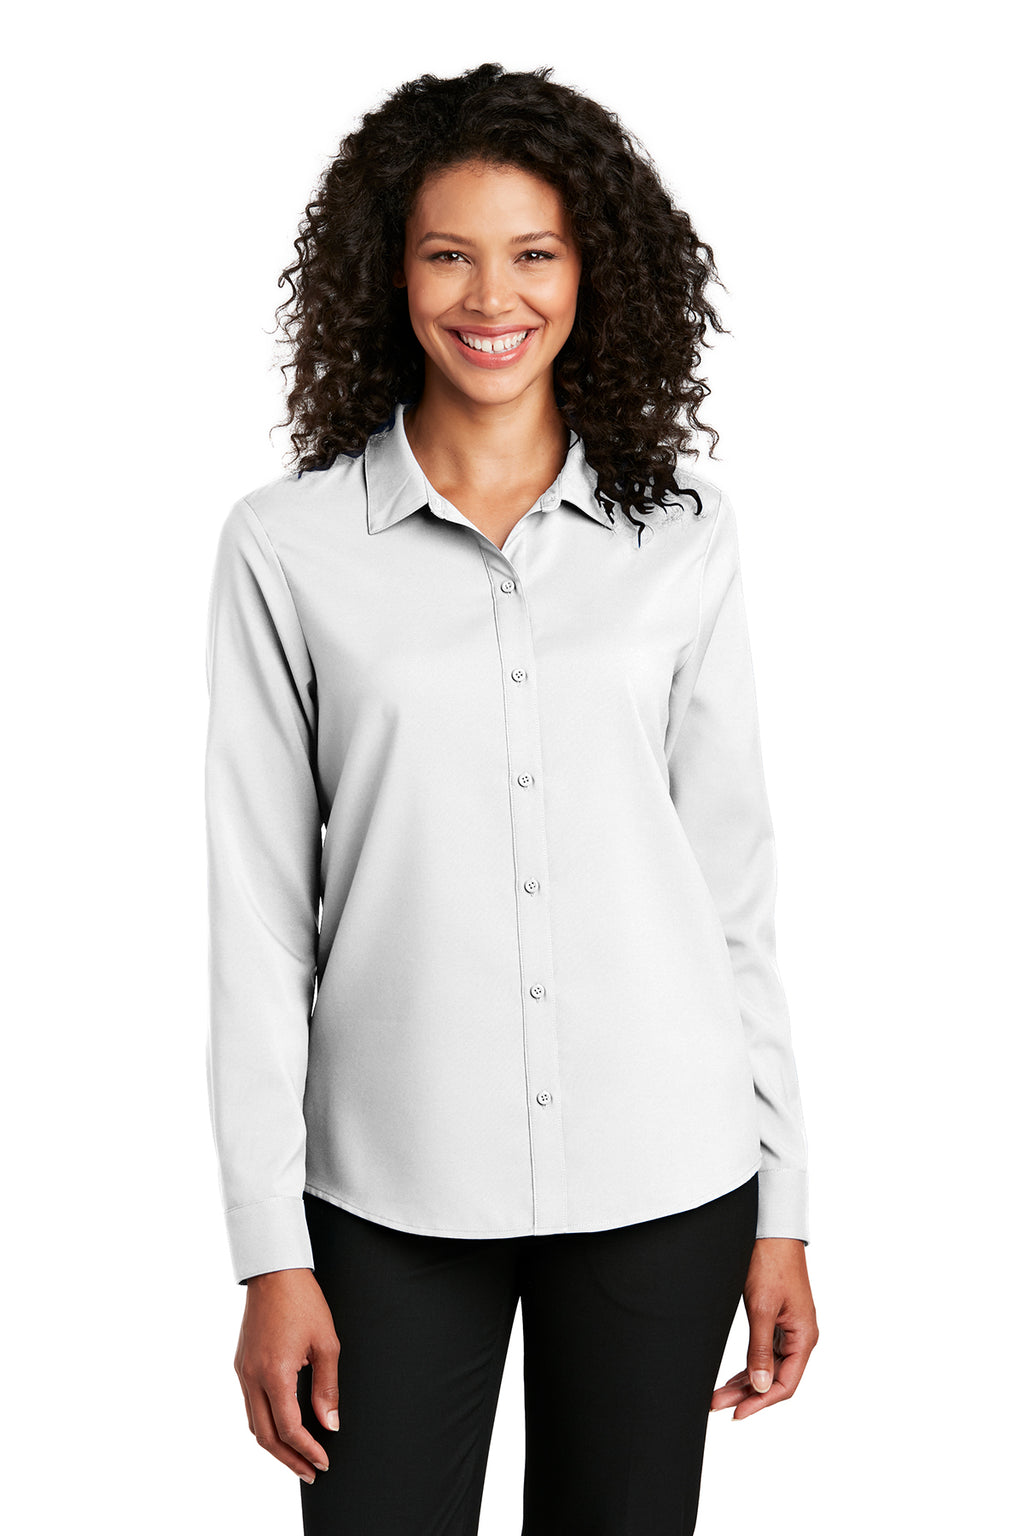 Port Authority ® Ladies Long Sleeve Performance Staff Shirt